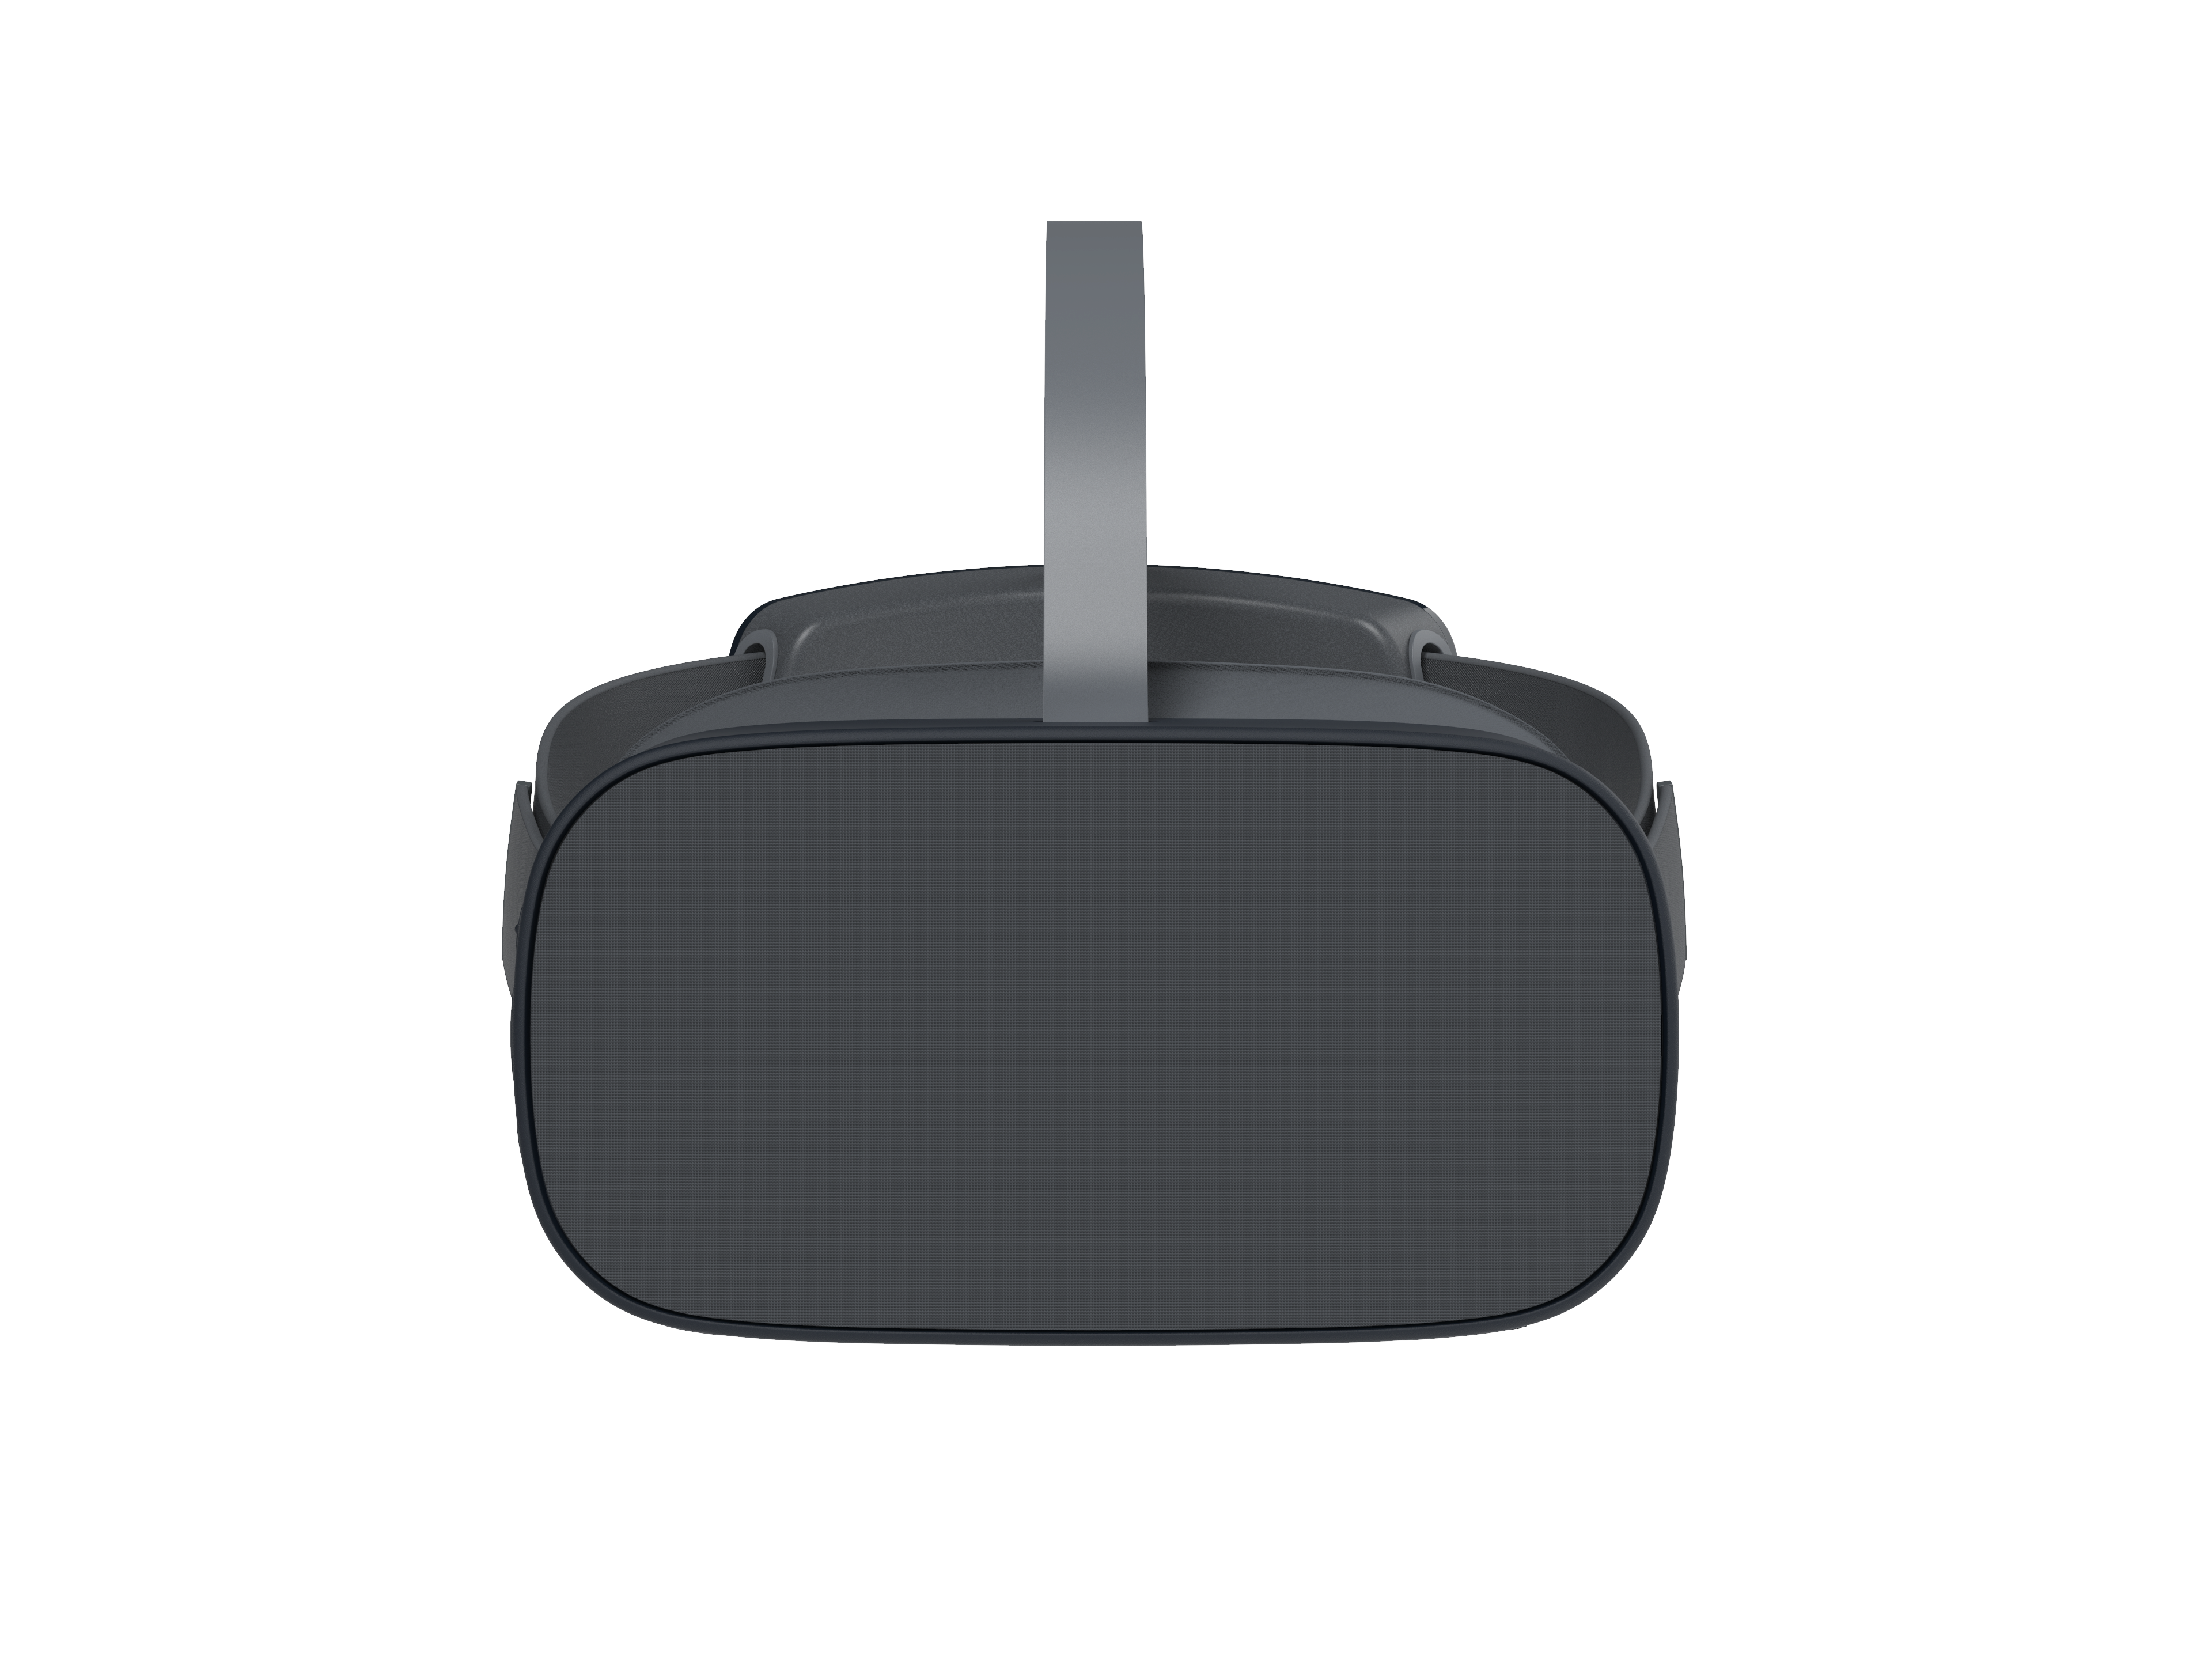 Pico G2 4KS Virtual Reality Headset